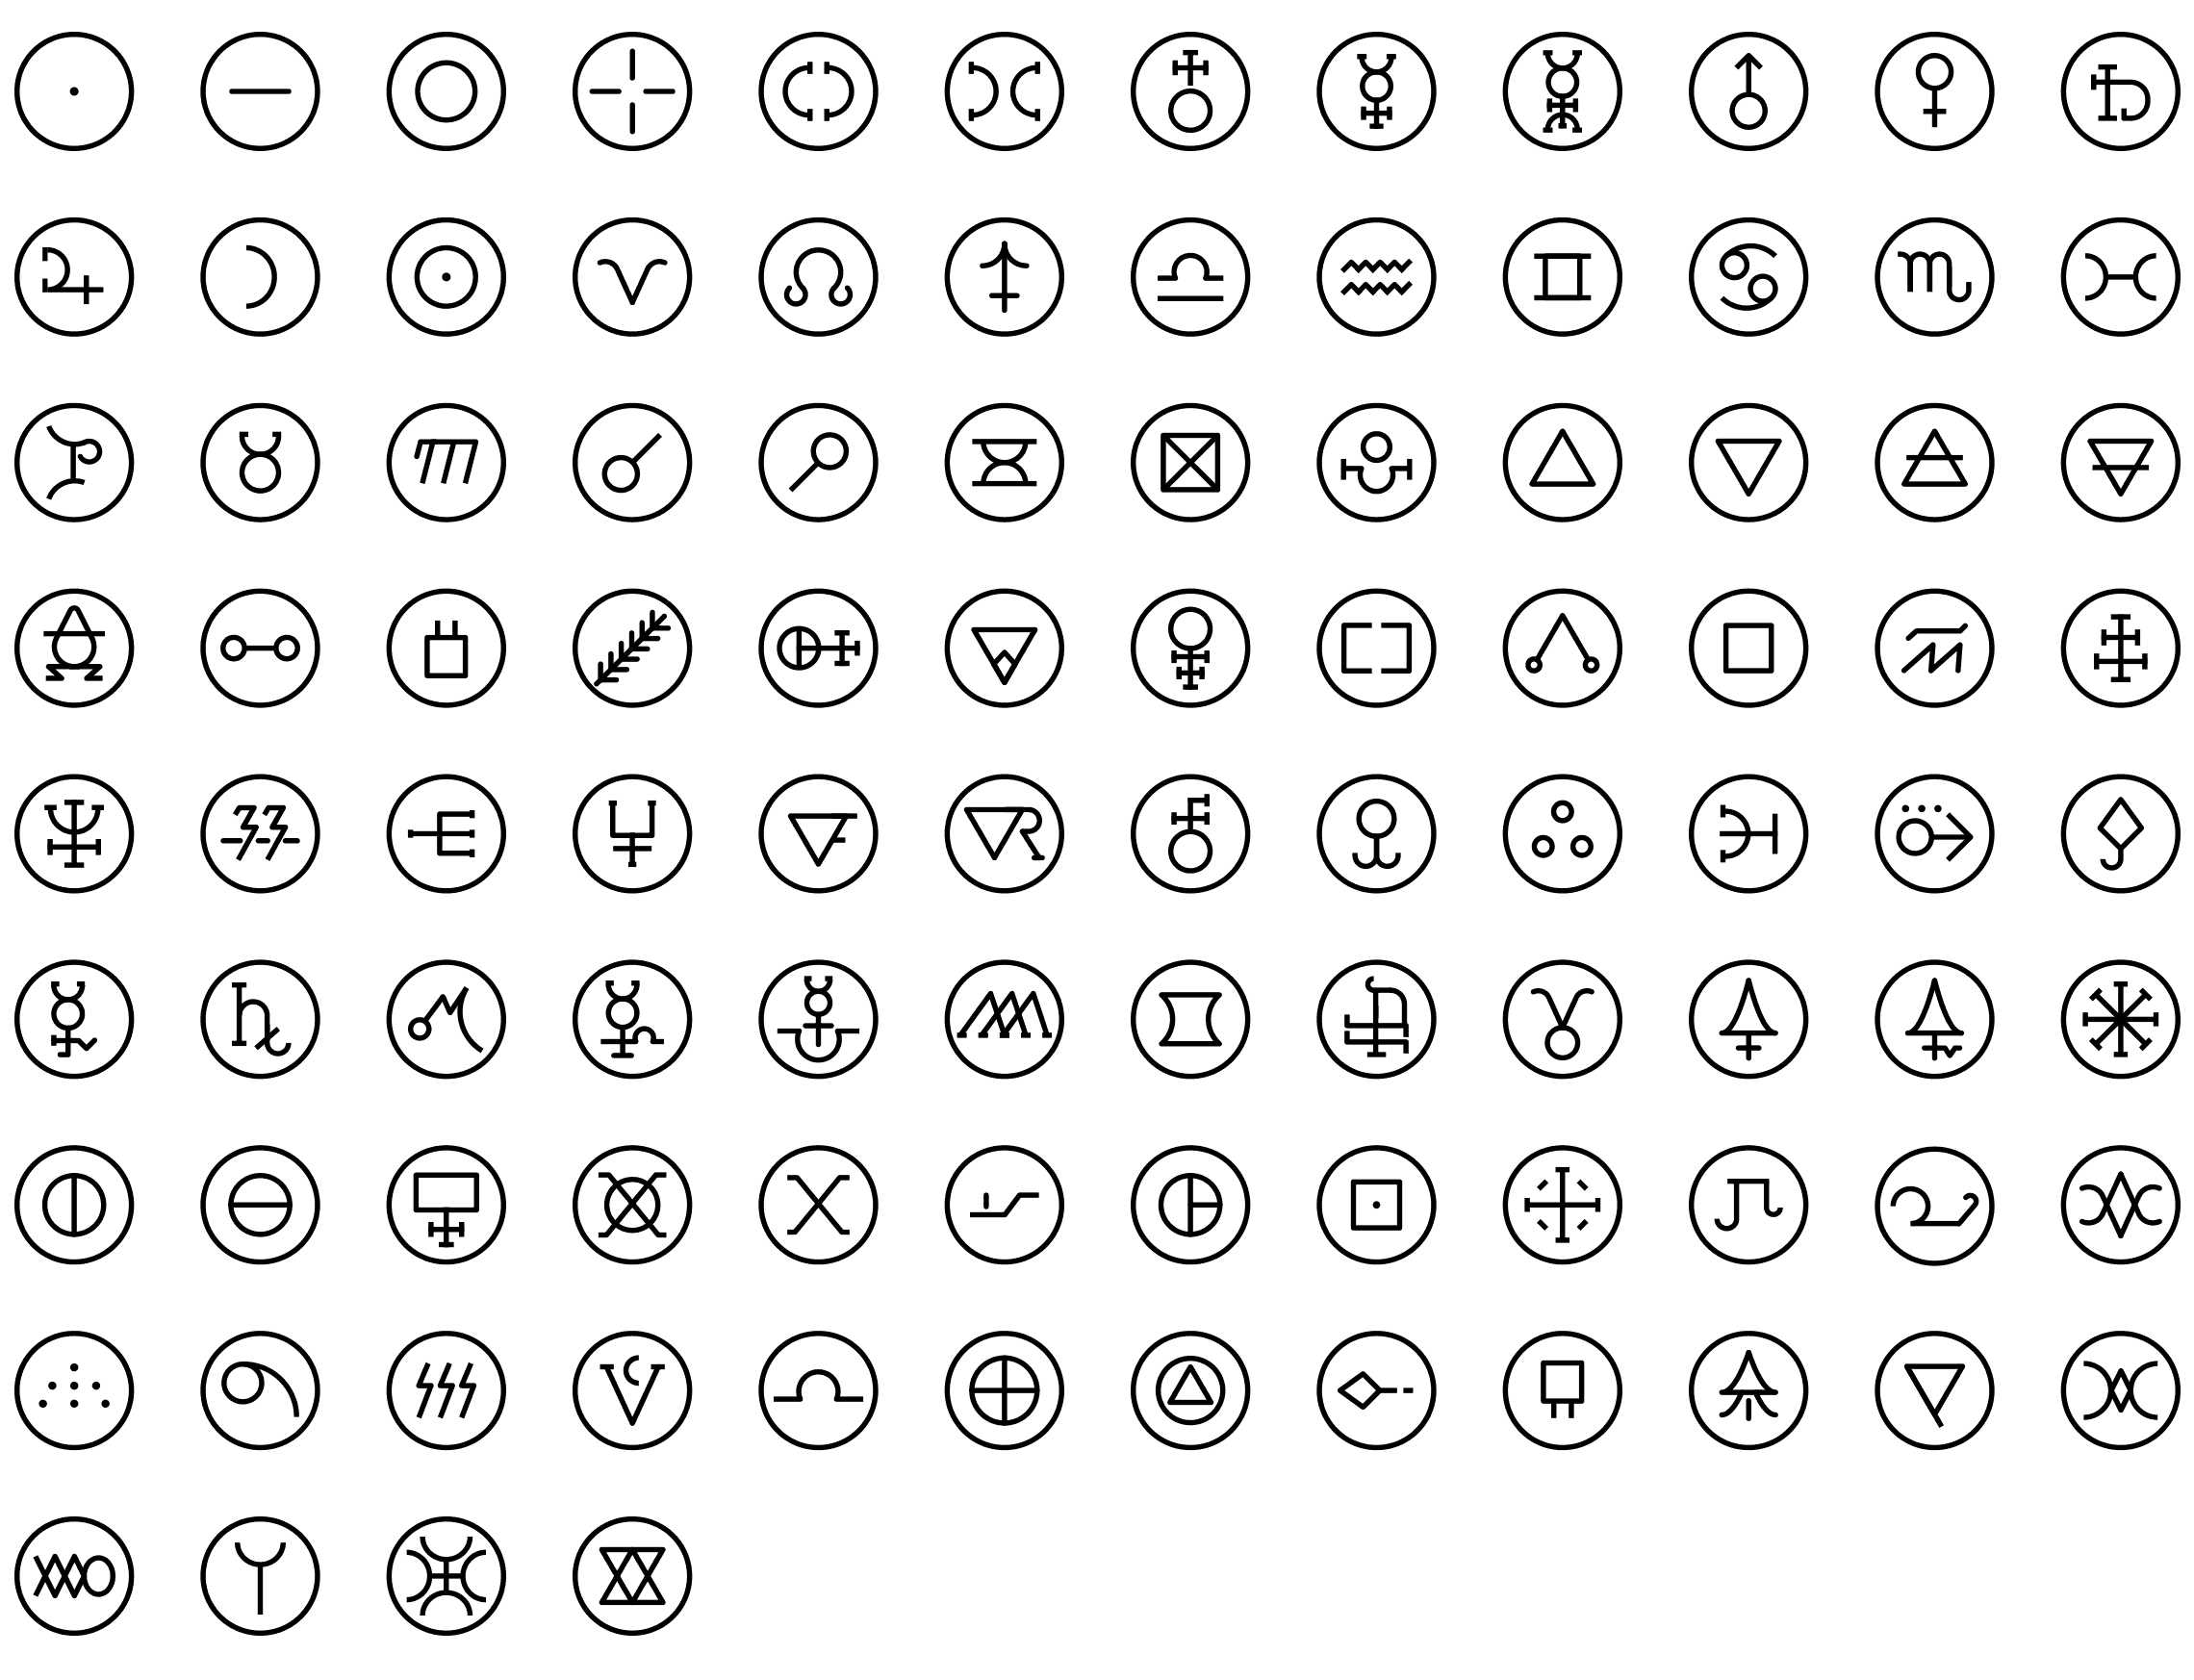 ancient-symbols-line-icons-preview